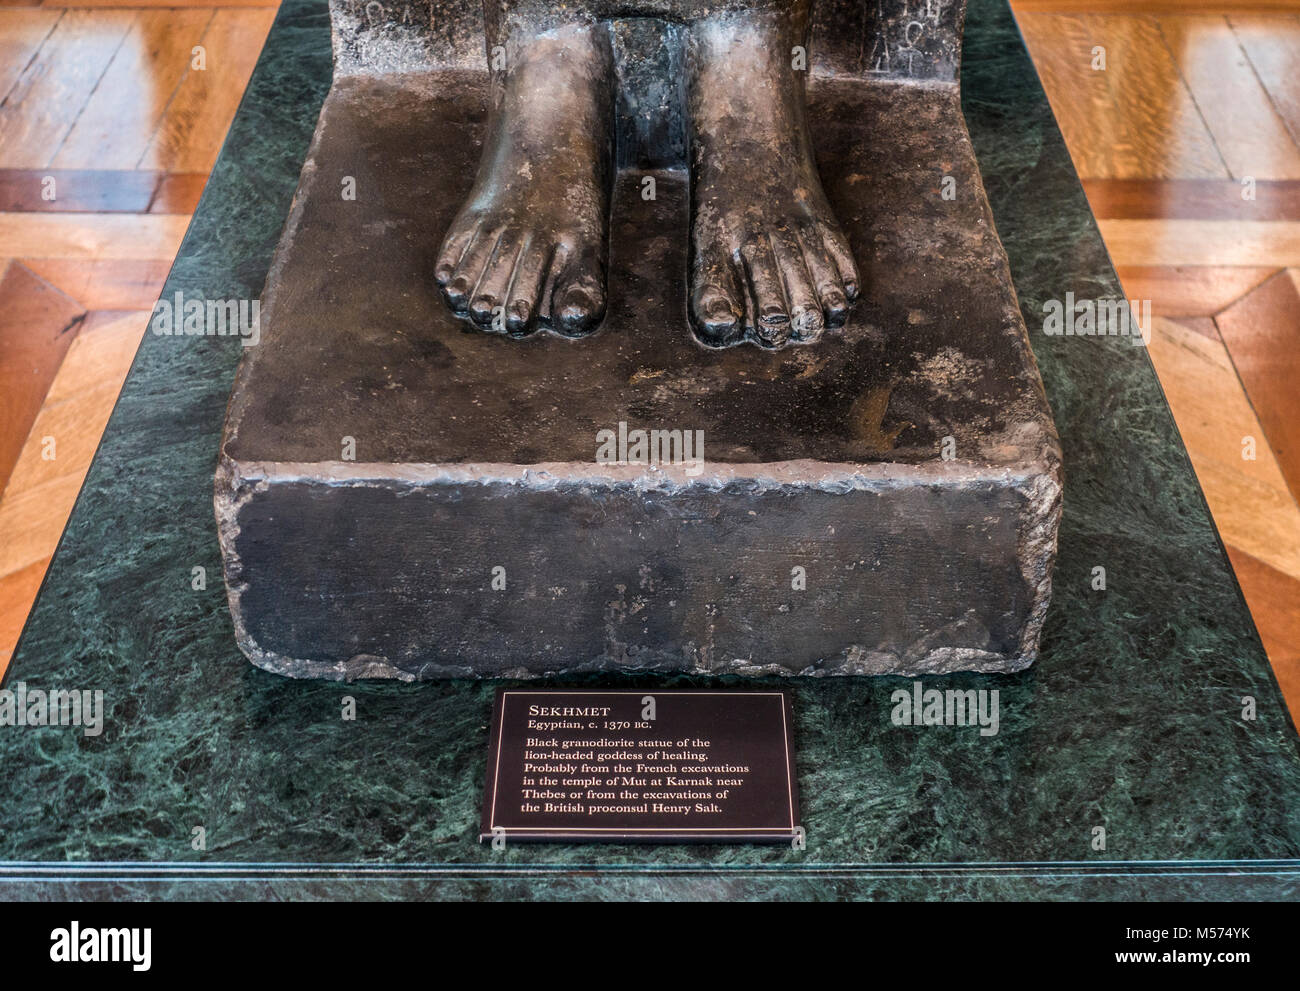 The feet of Sekhmet - black granodiorite, Egyptian, lion-headed goddess statue. British Museum (human history, art and culture). London, England, UK. Stock Photo